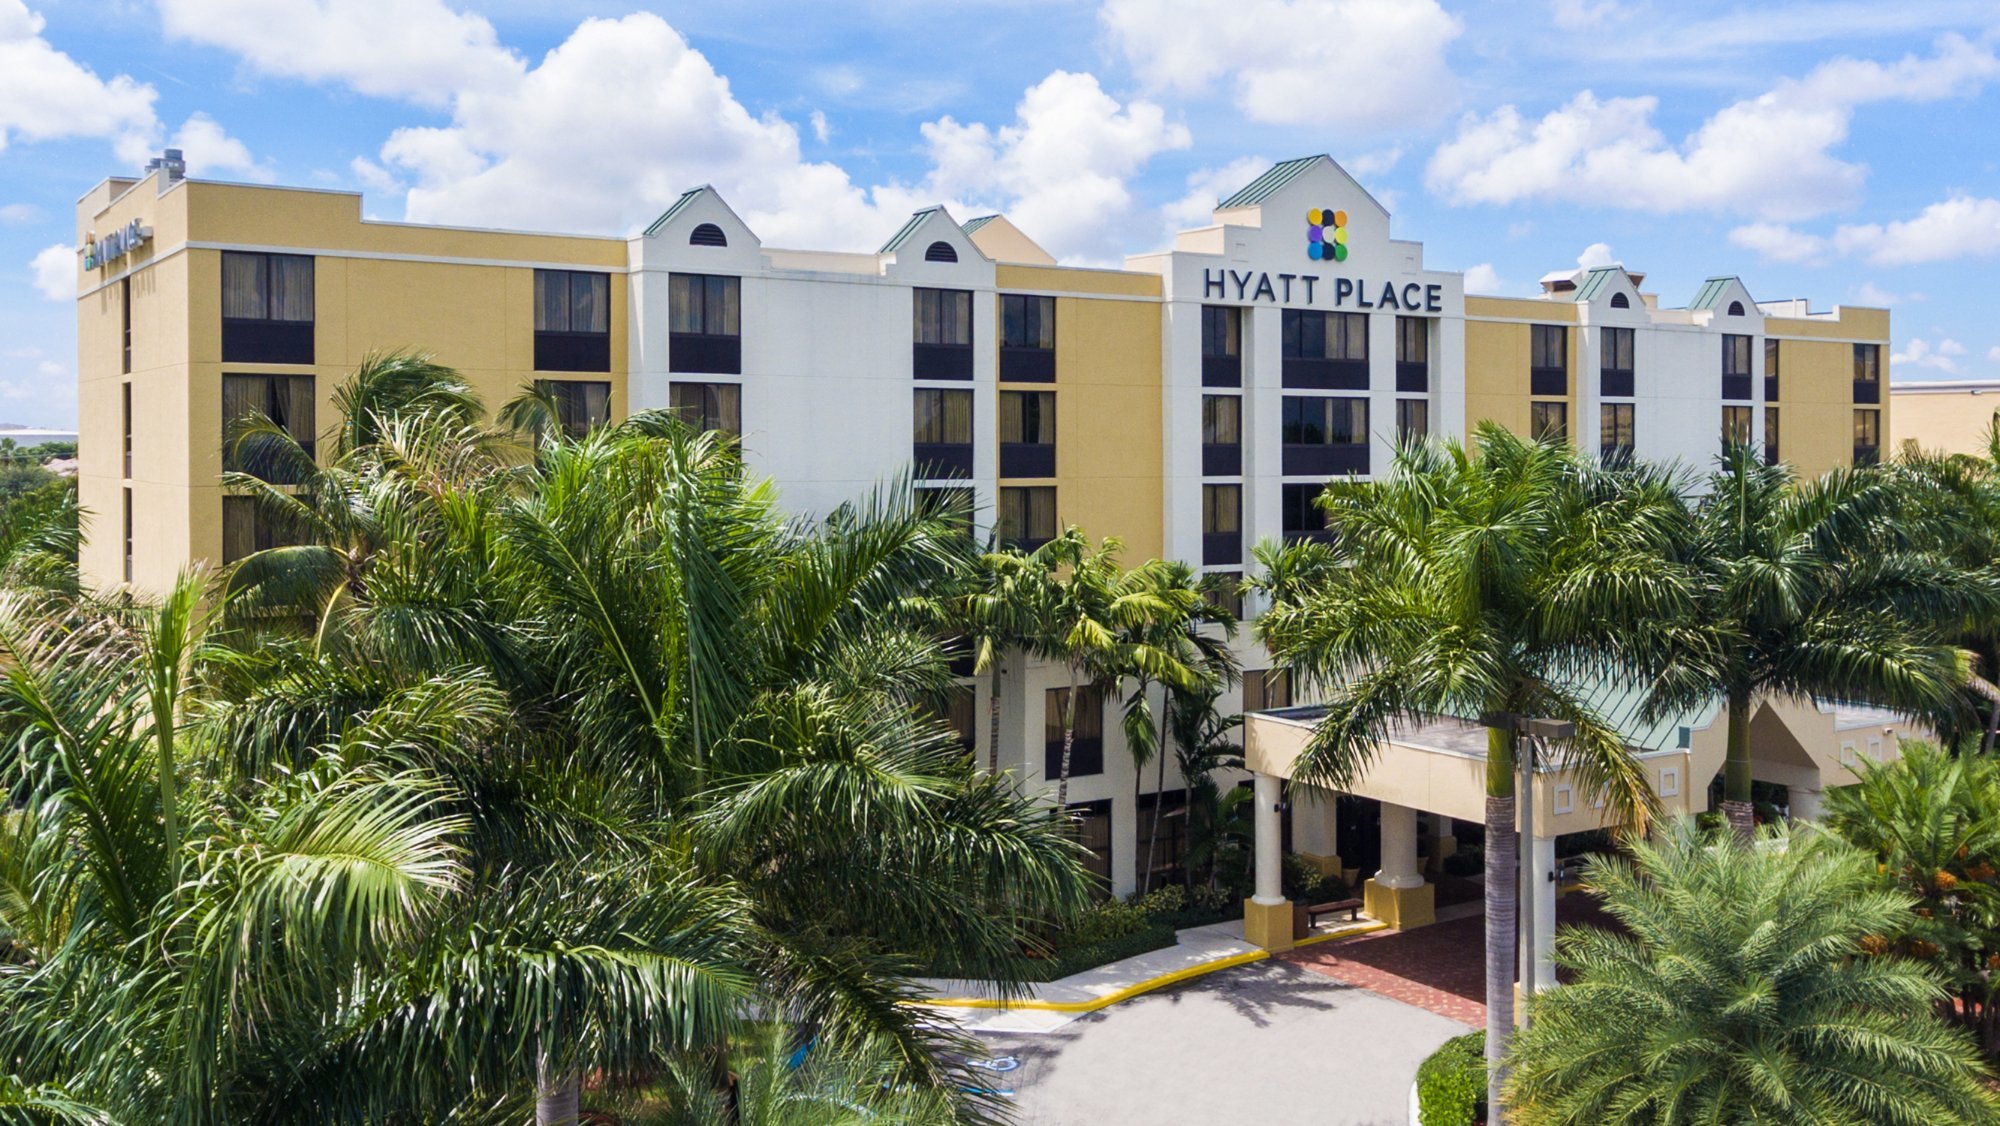 Photo of Hyatt Place Fort Lauderdale Cruise Port & Convention Center, Fort Lauderdale, FL